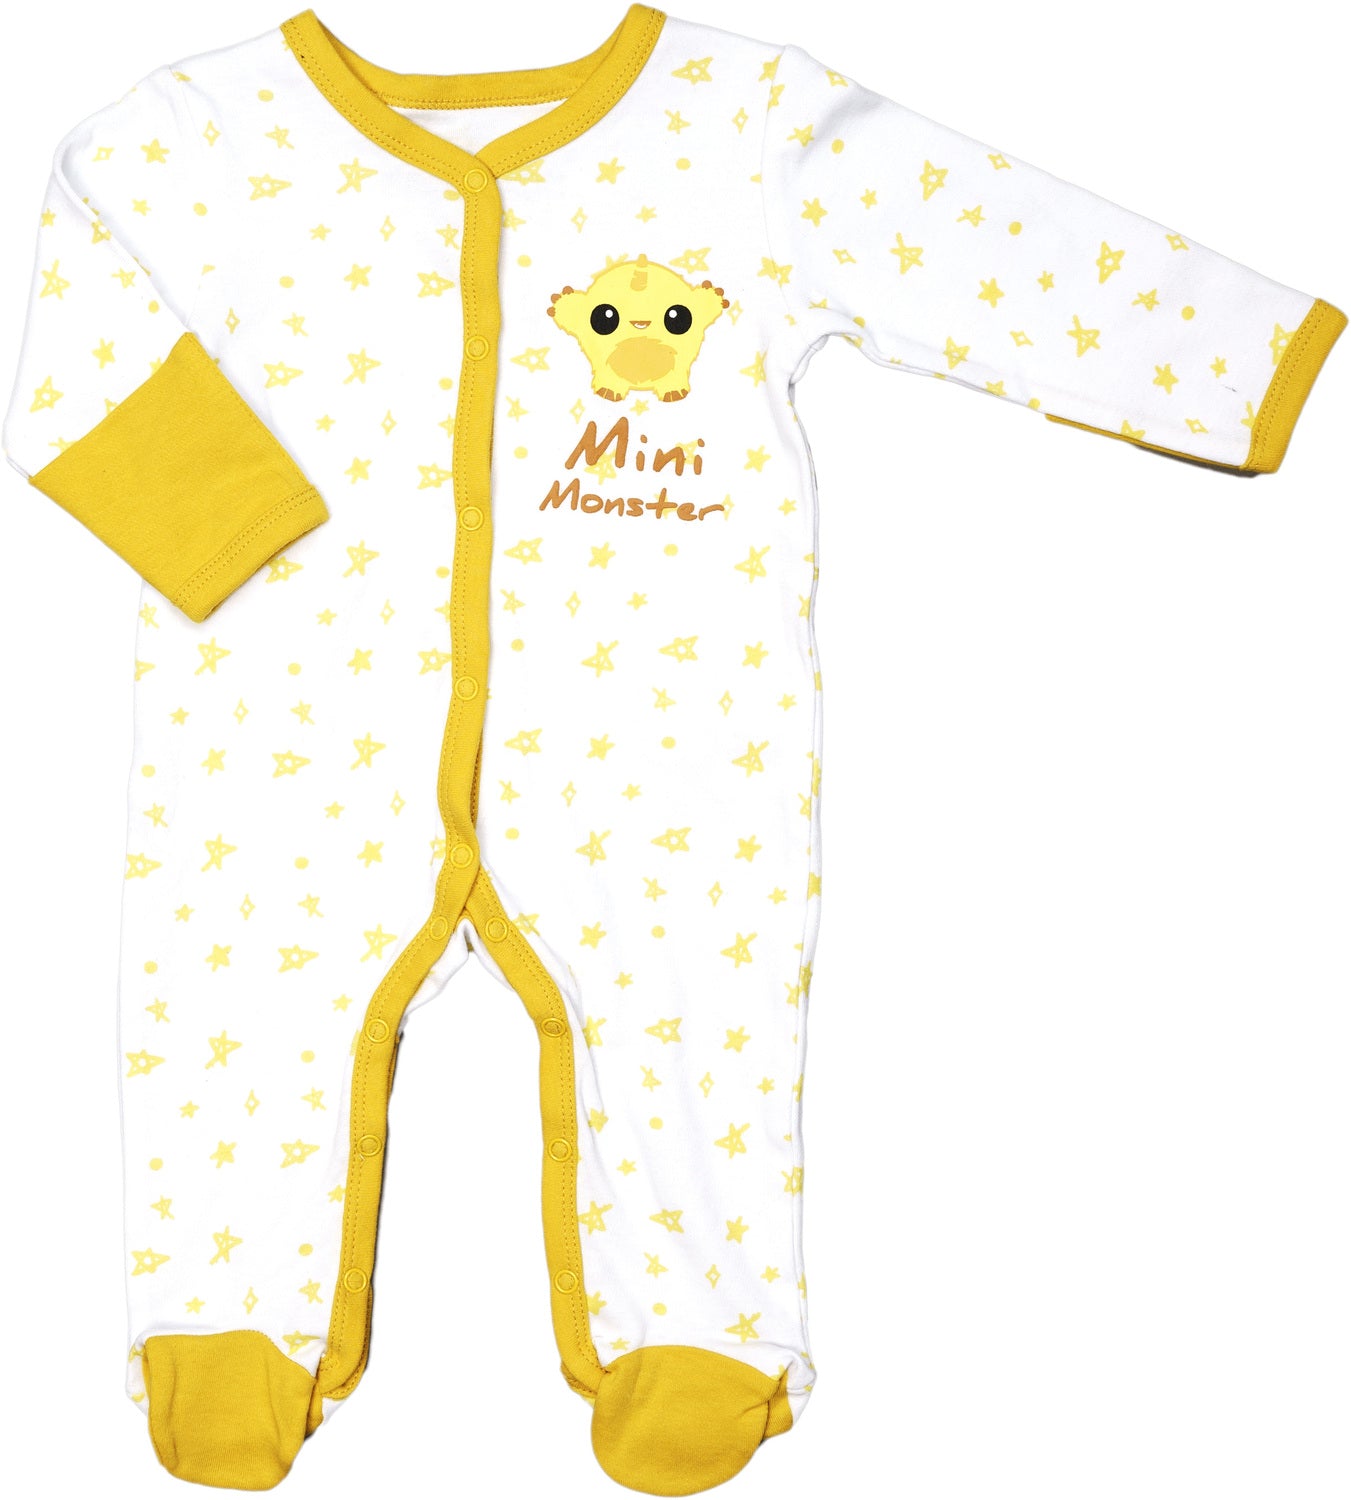 Mini Monster Pajamas by Monster Munchkins